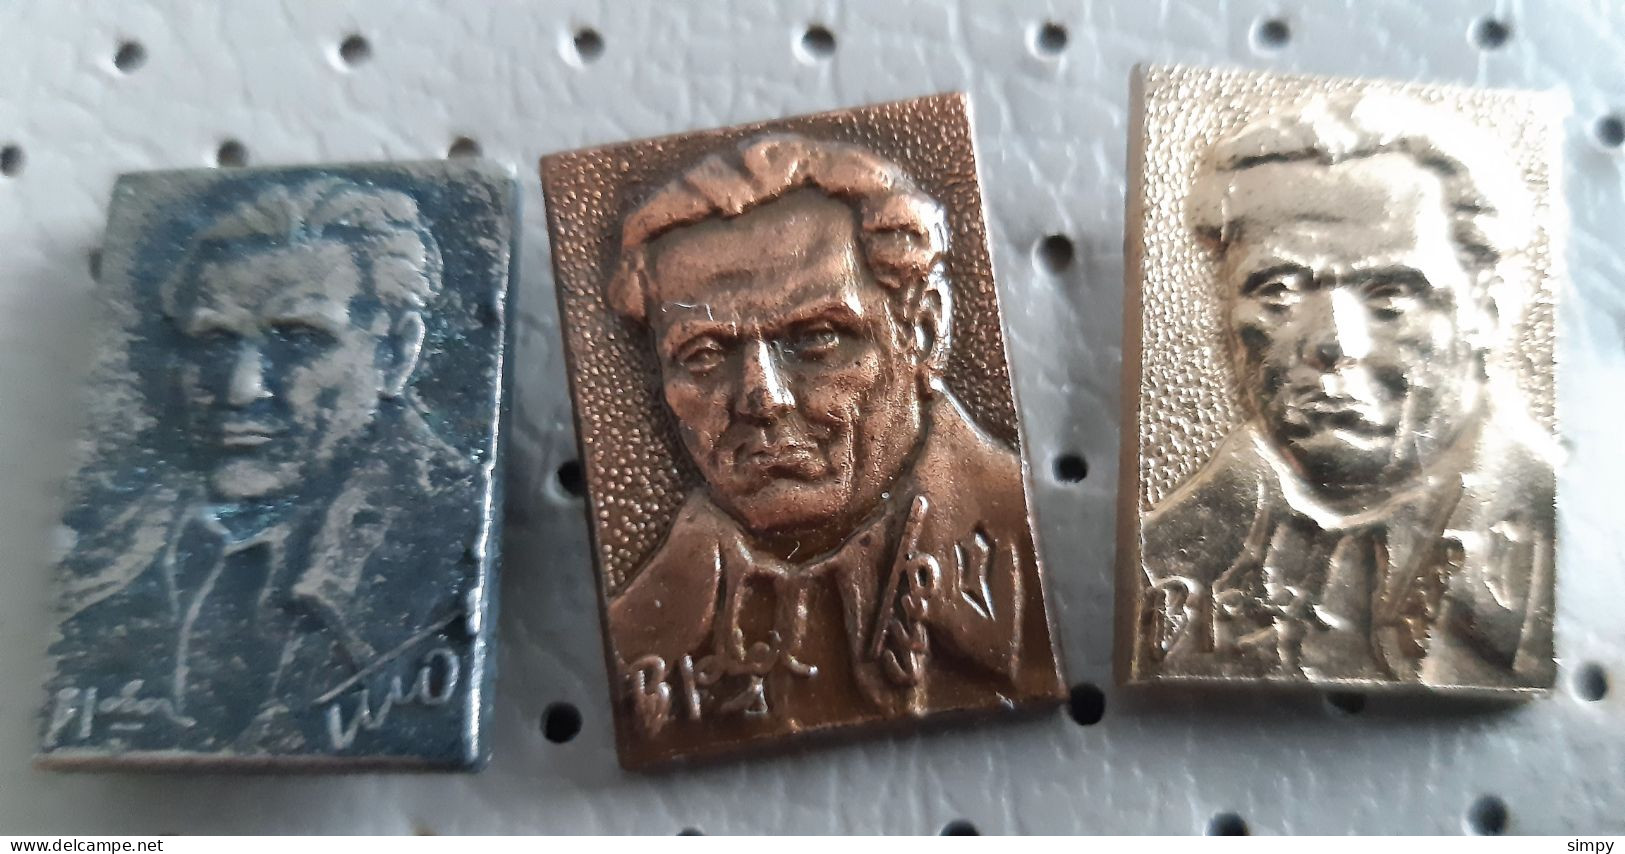 Josip Broz Tito Portret B. Jakac Yugoslavia  Pins - Beroemde Personen